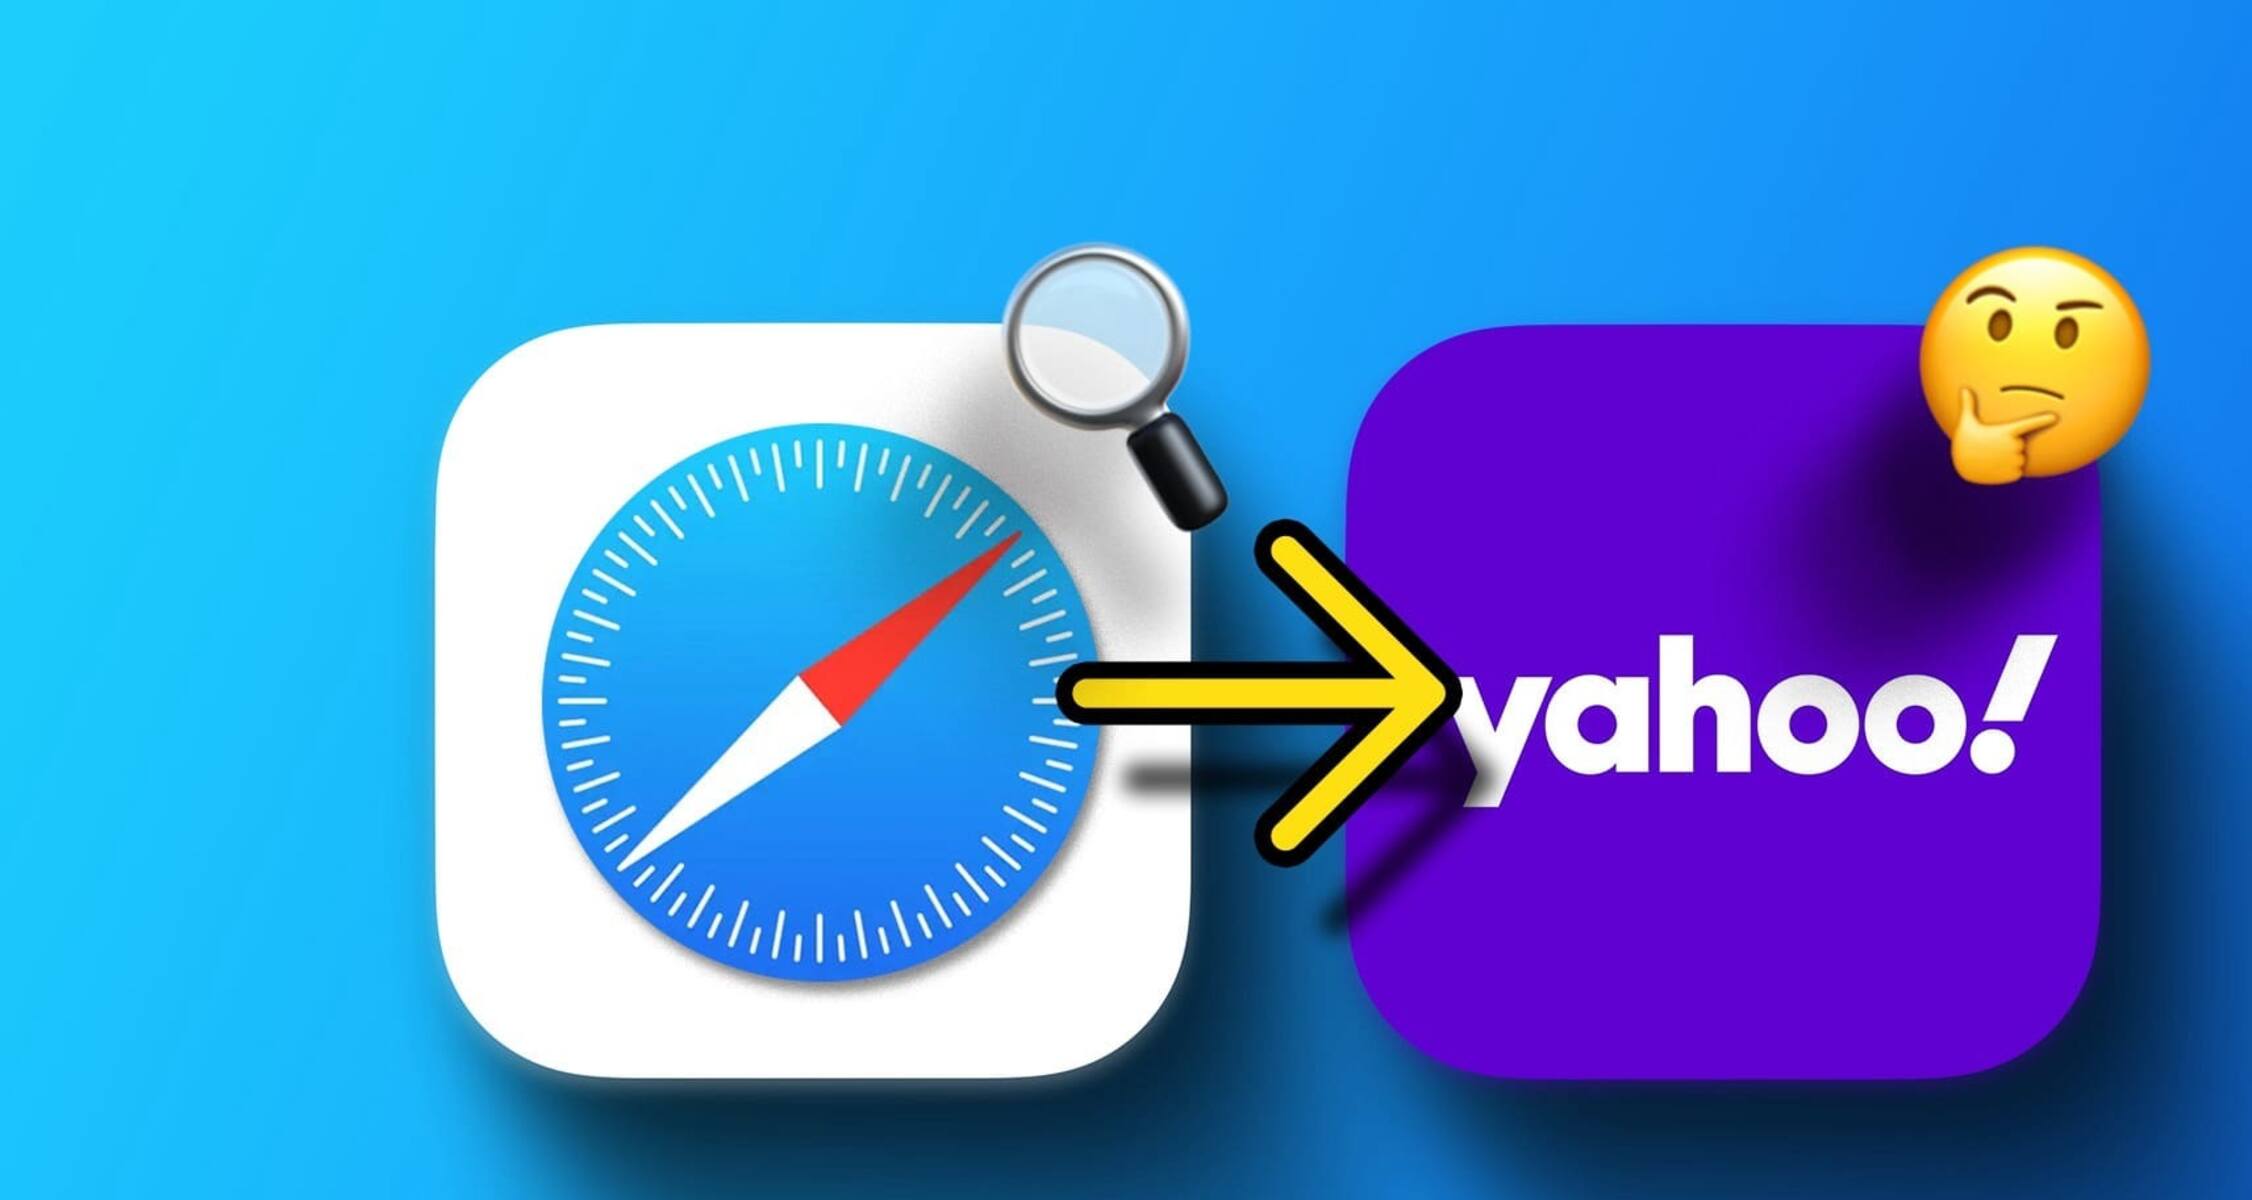 Why Does Safari Redirect To Yahoo